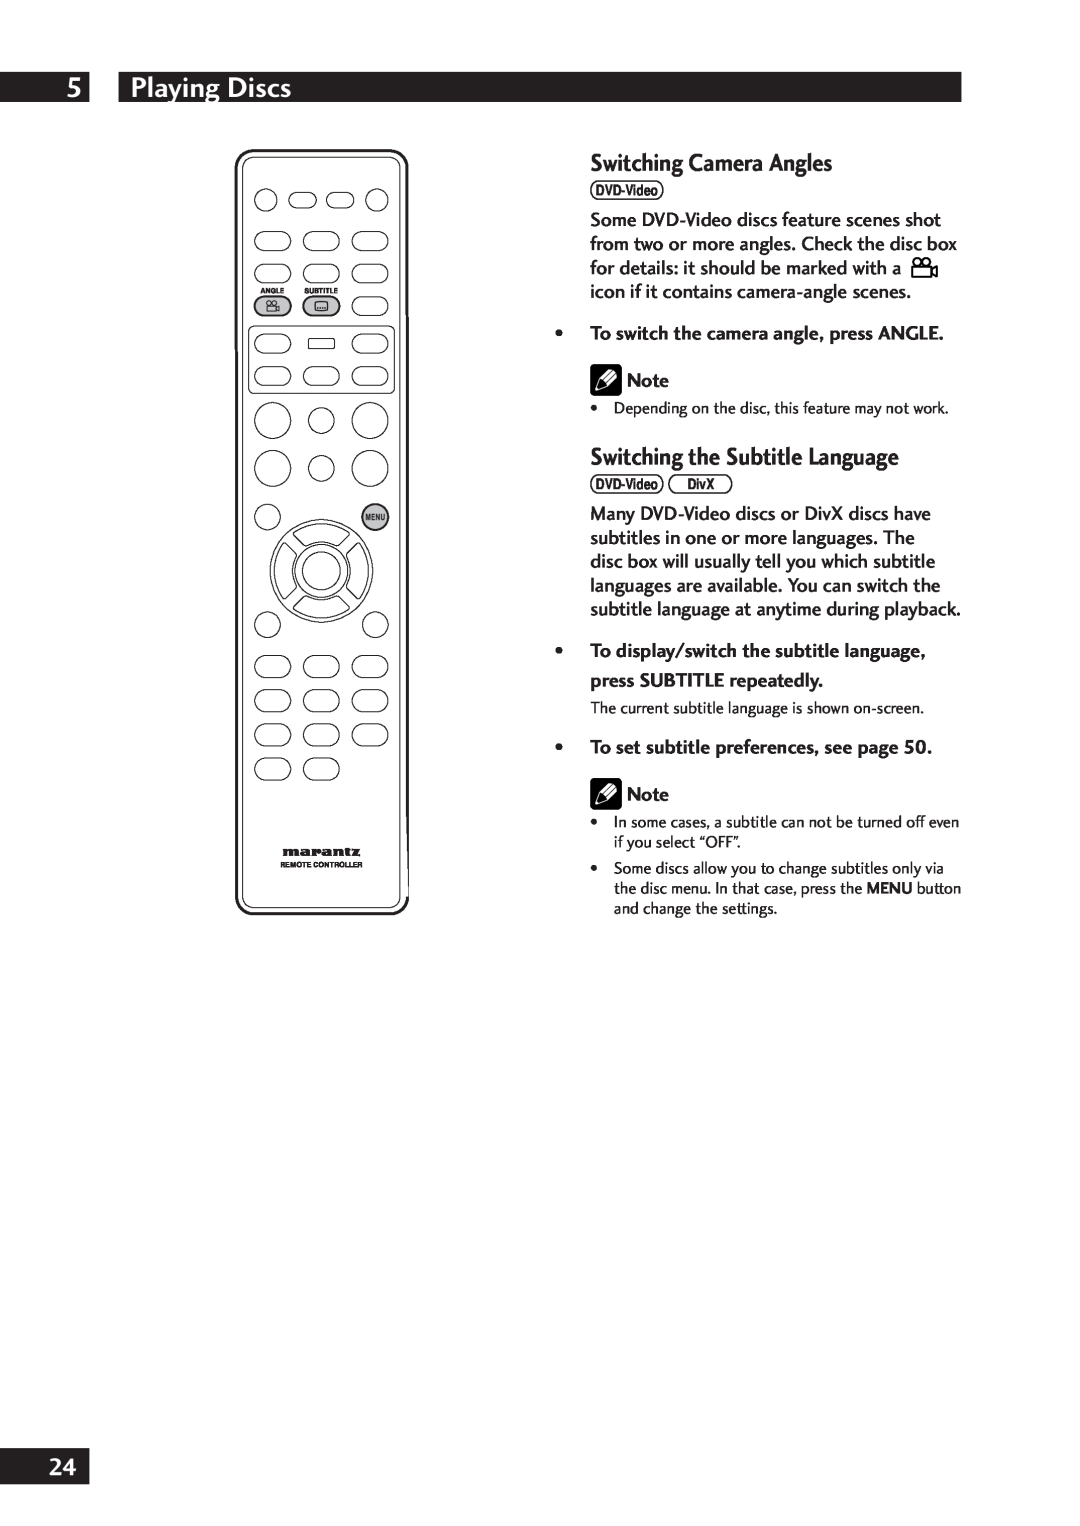 Marantz DV7001 manual Switching Camera Angles, Switching the Subtitle Language, To switch the camera angle, press ANGLE 